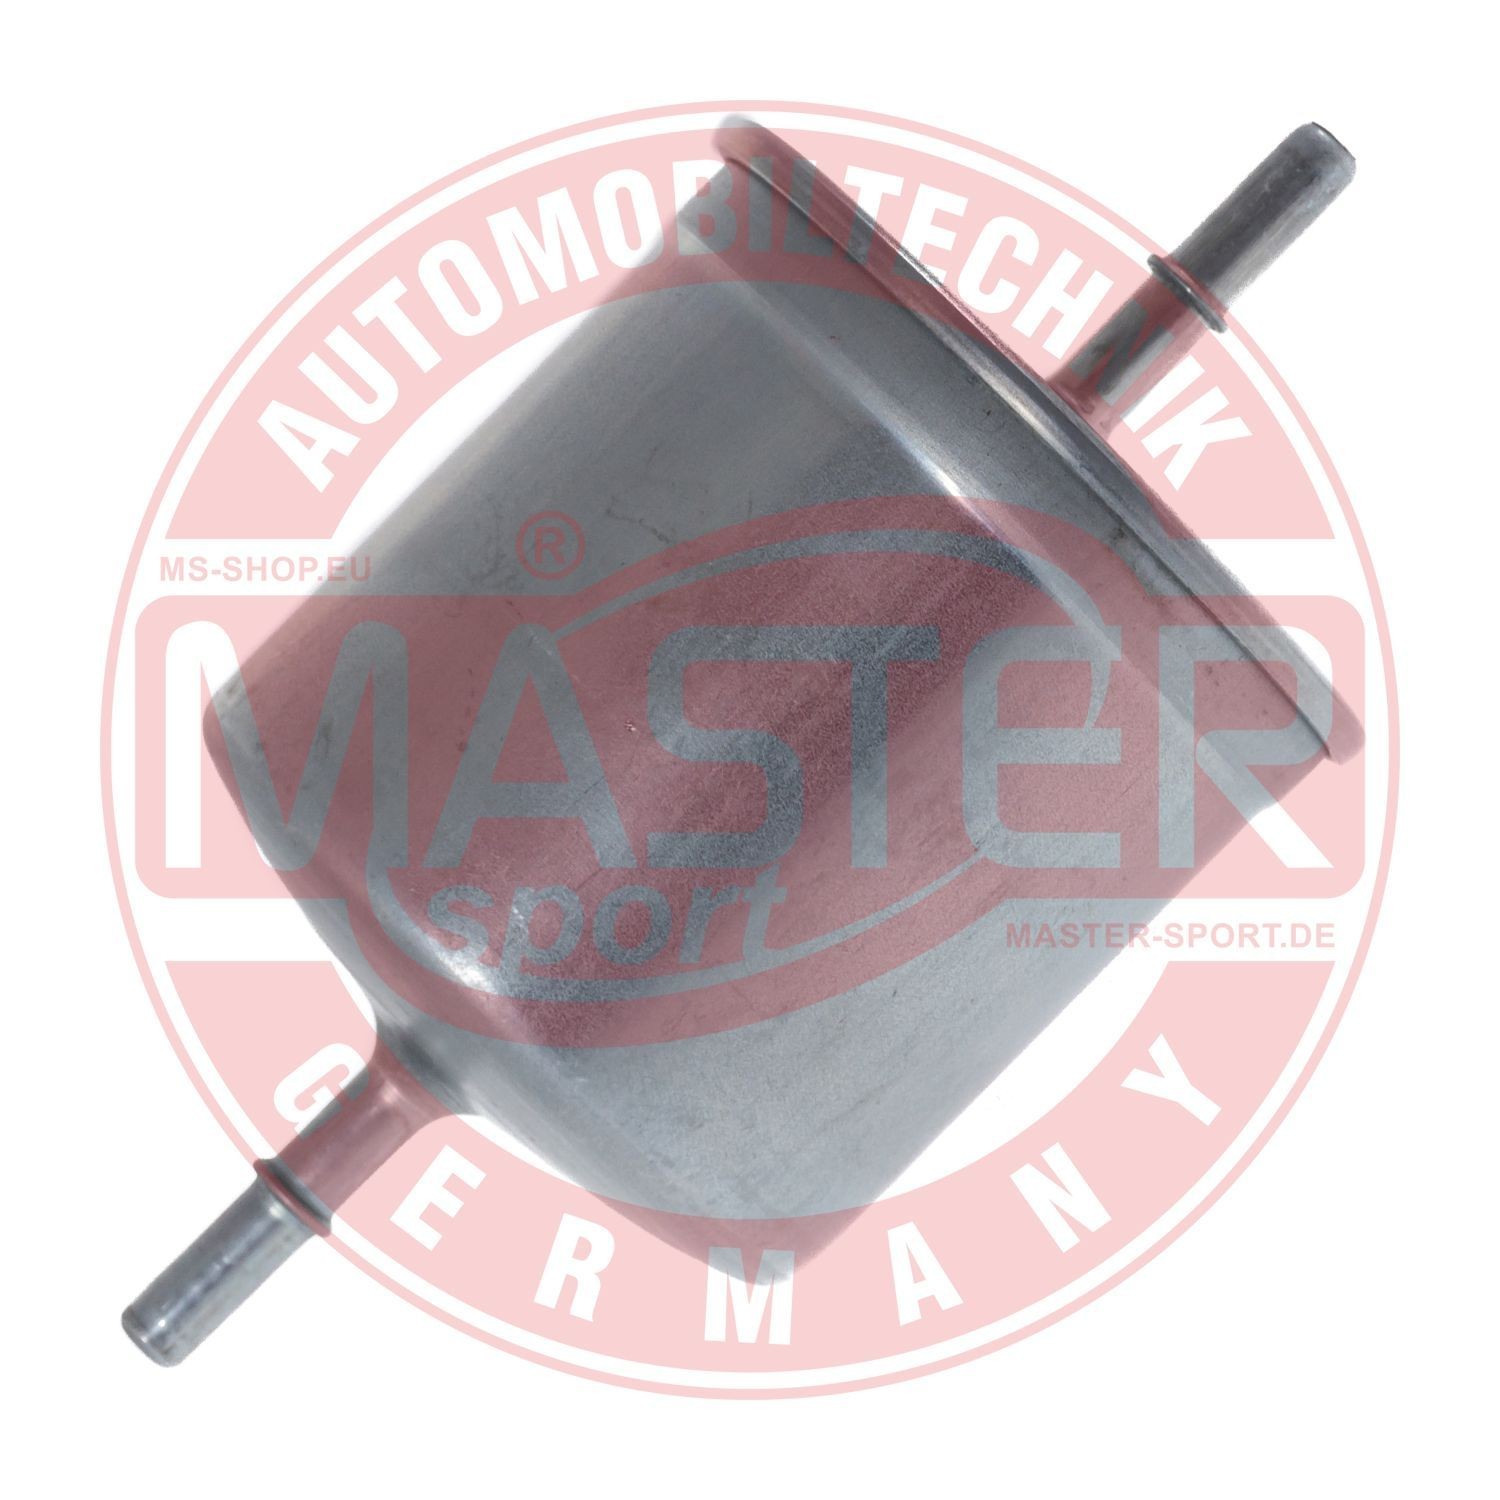 822/2-KF-PCS-MS MASTER-SPORT Fuel filters PORSCHE In-Line Filter, 8mm, 8mm